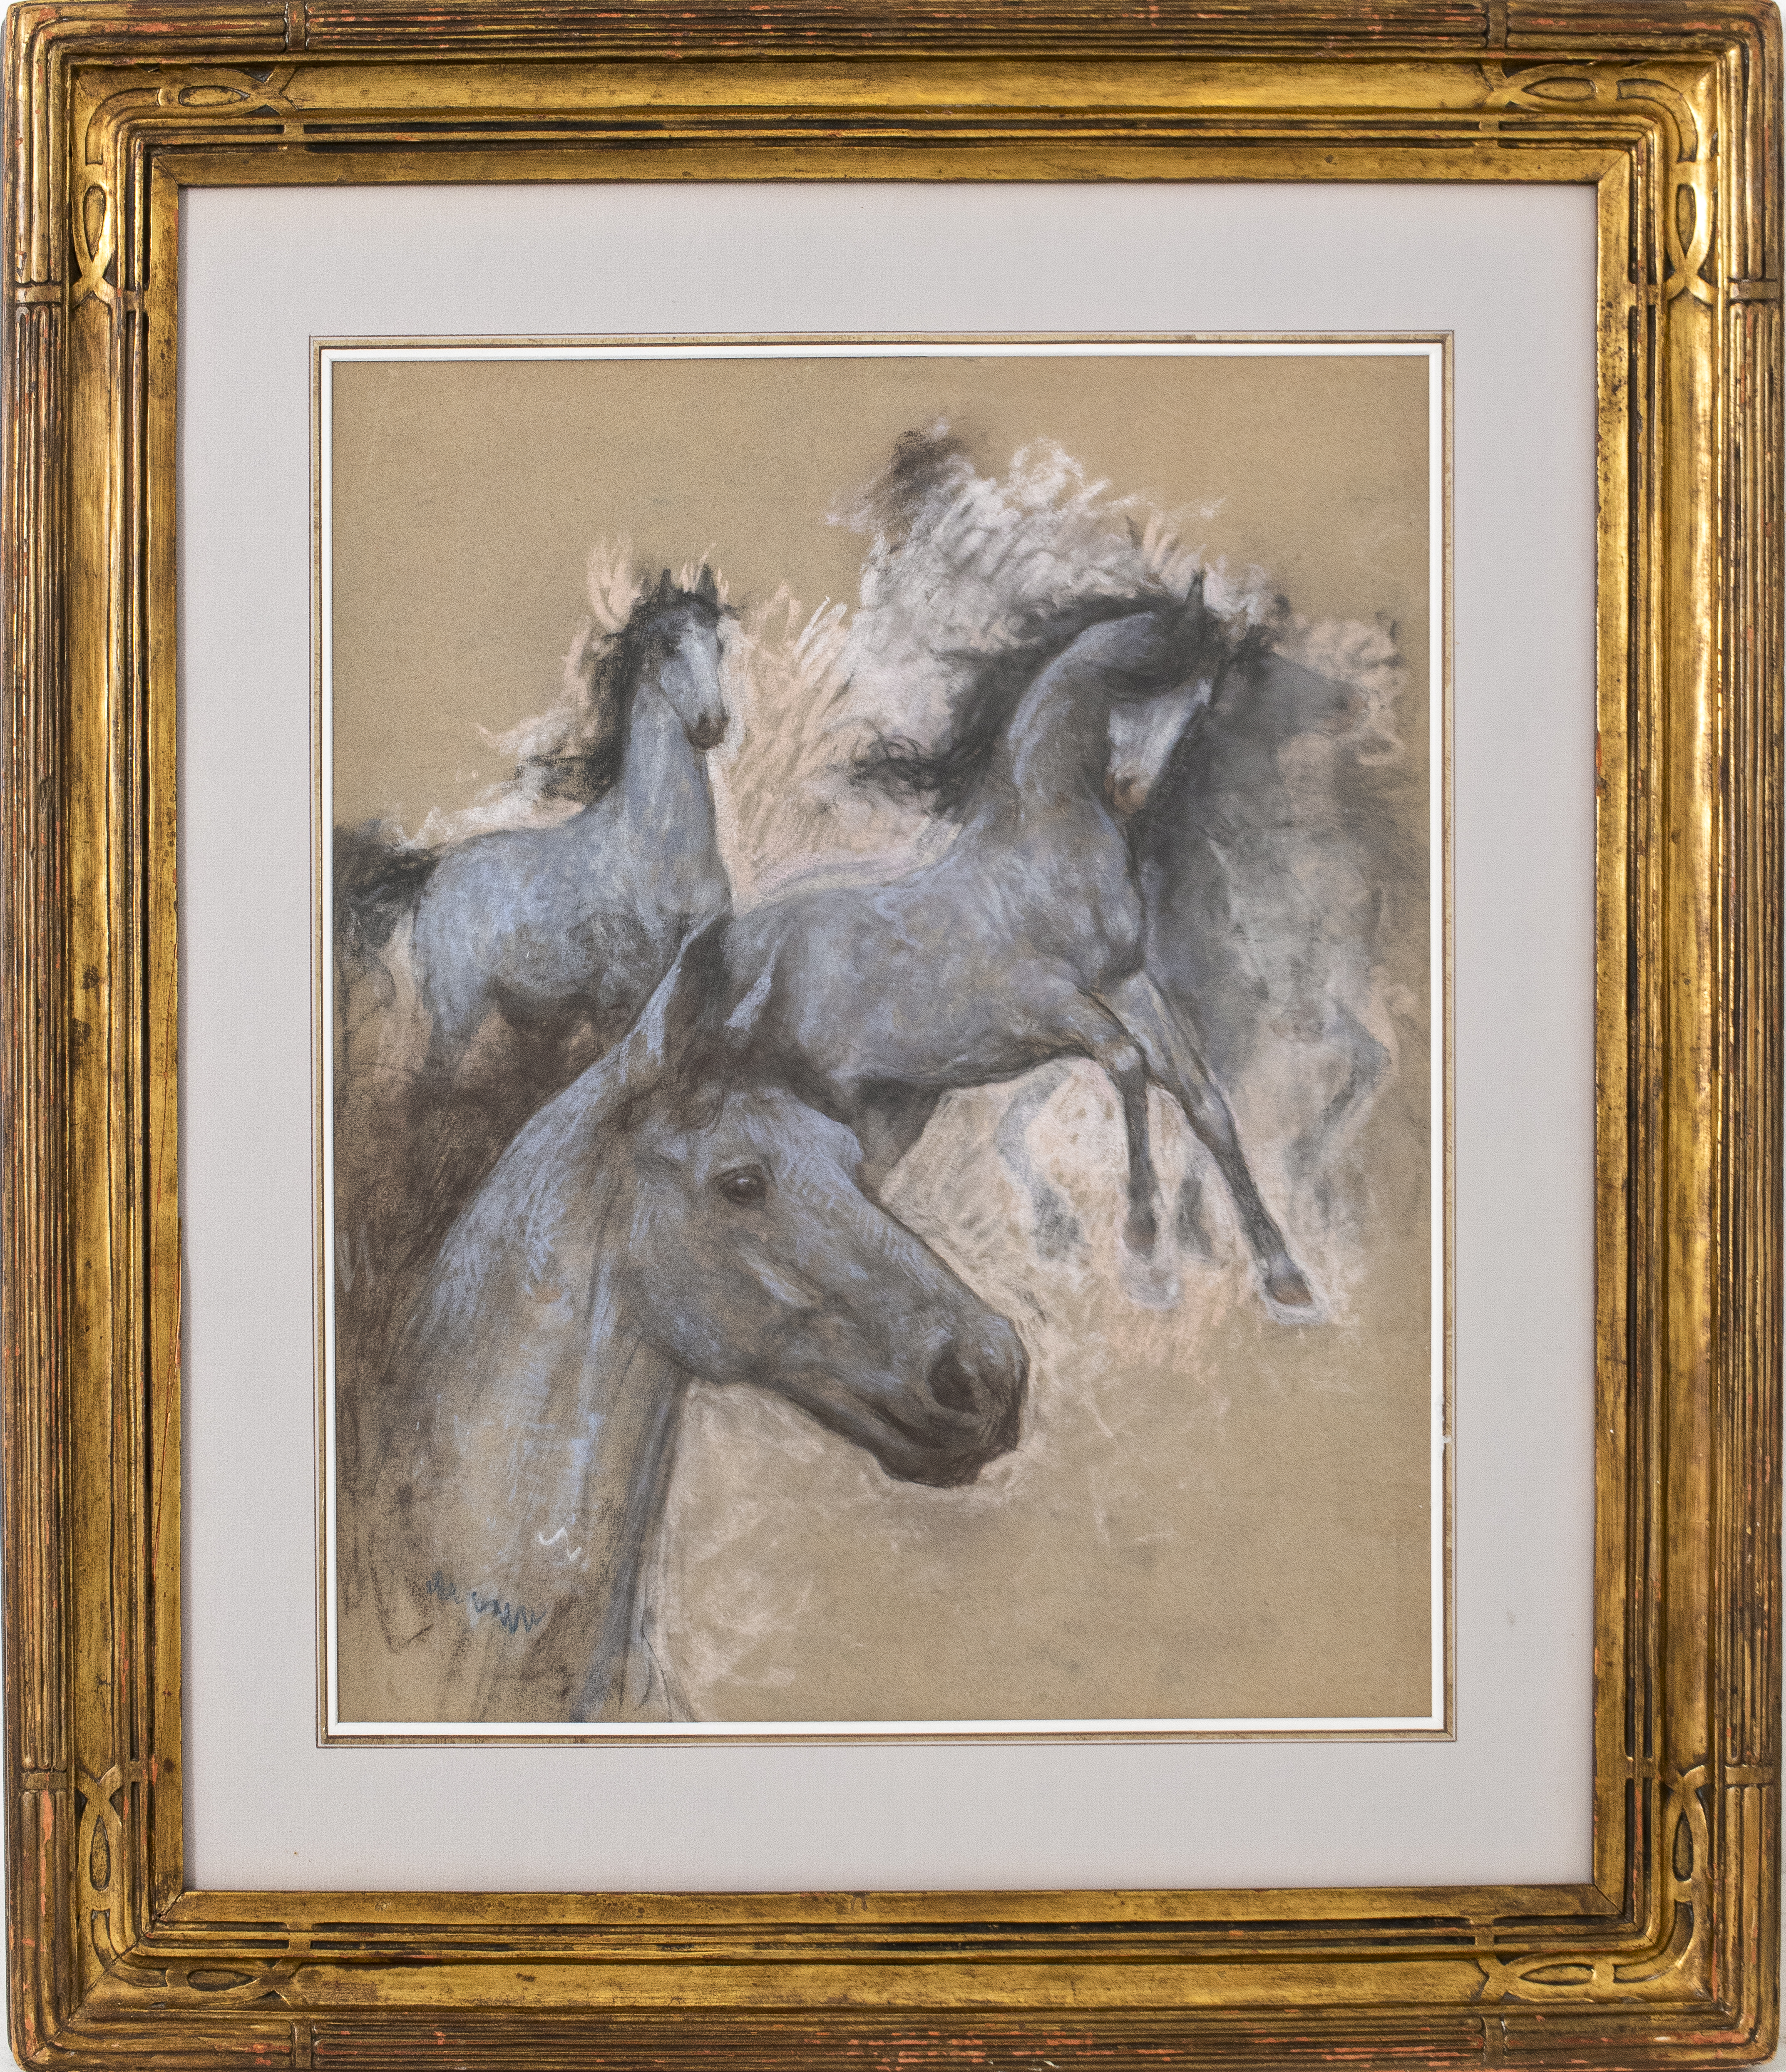 LUCIEN LEVY-DHURMER "HORSES" PASTEL